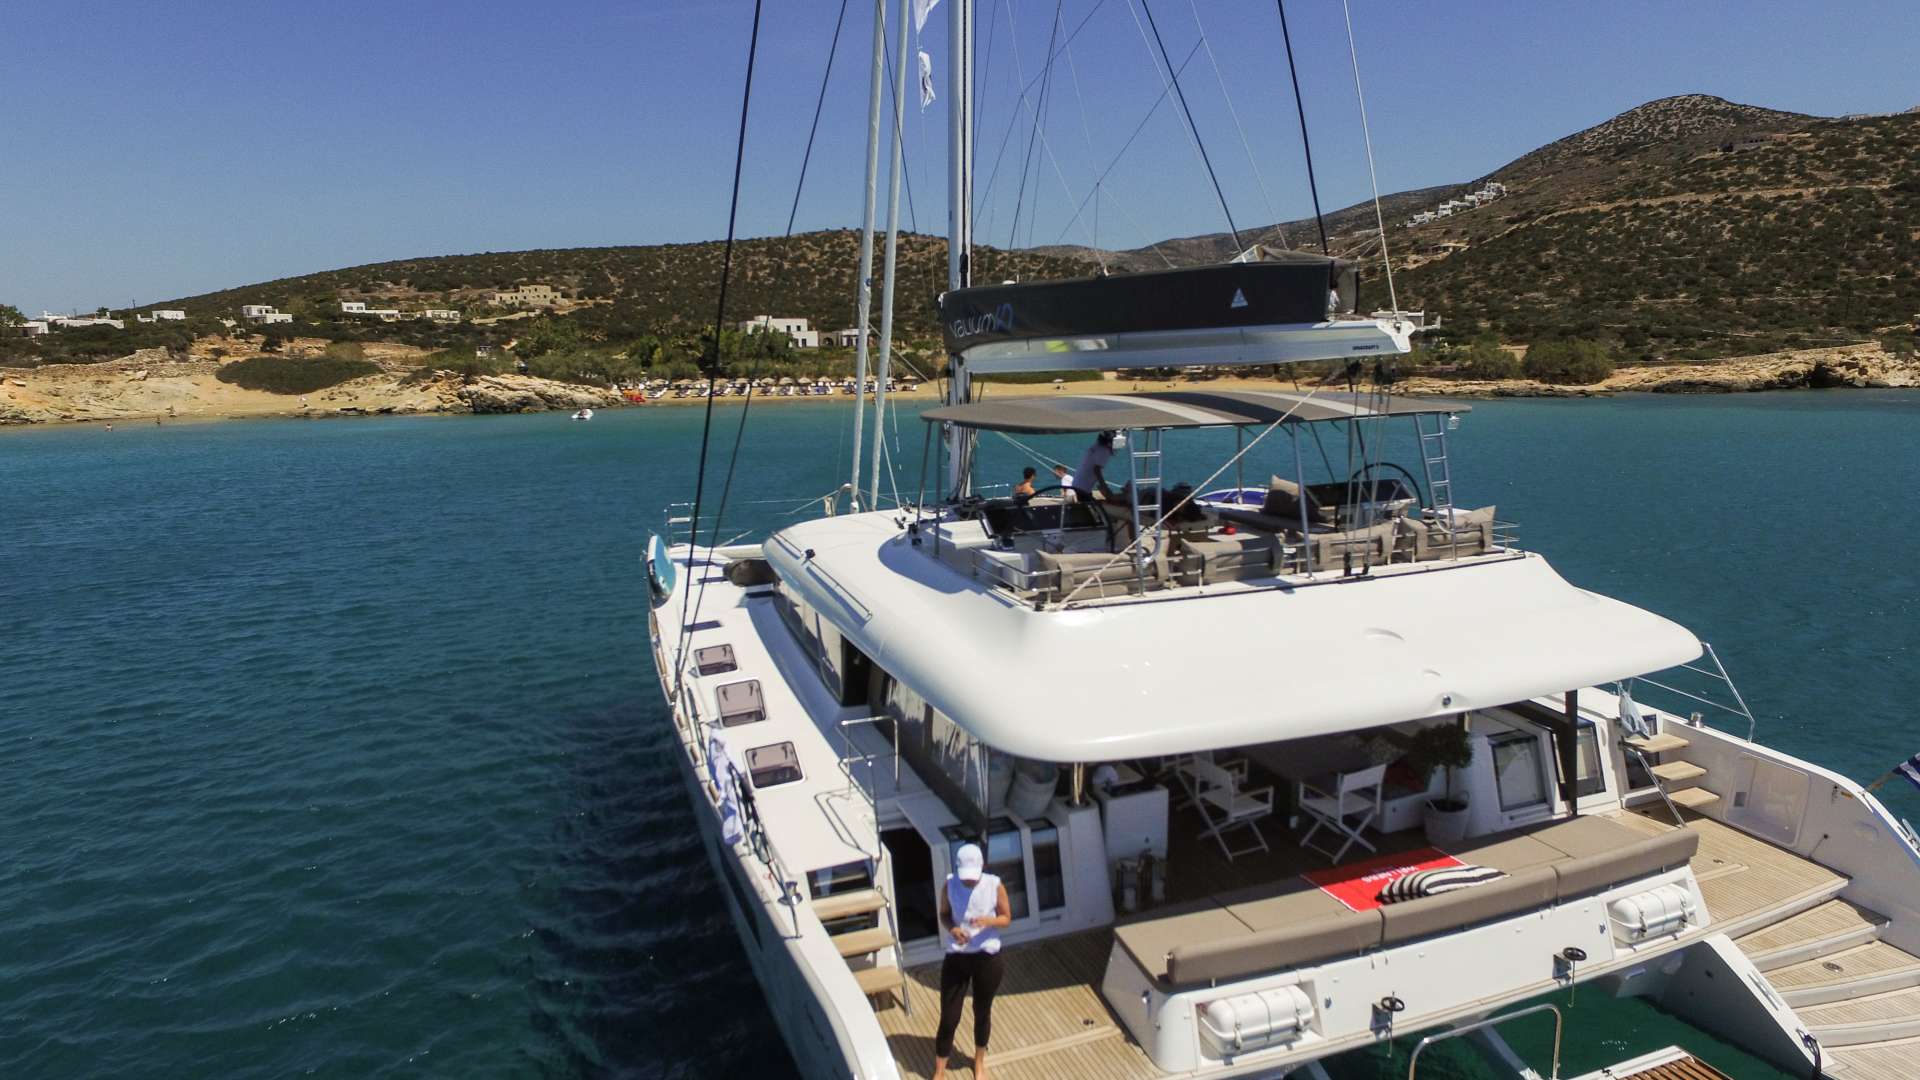 valium62 - Yacht Charter Kalamata & Boat hire in Greece 1